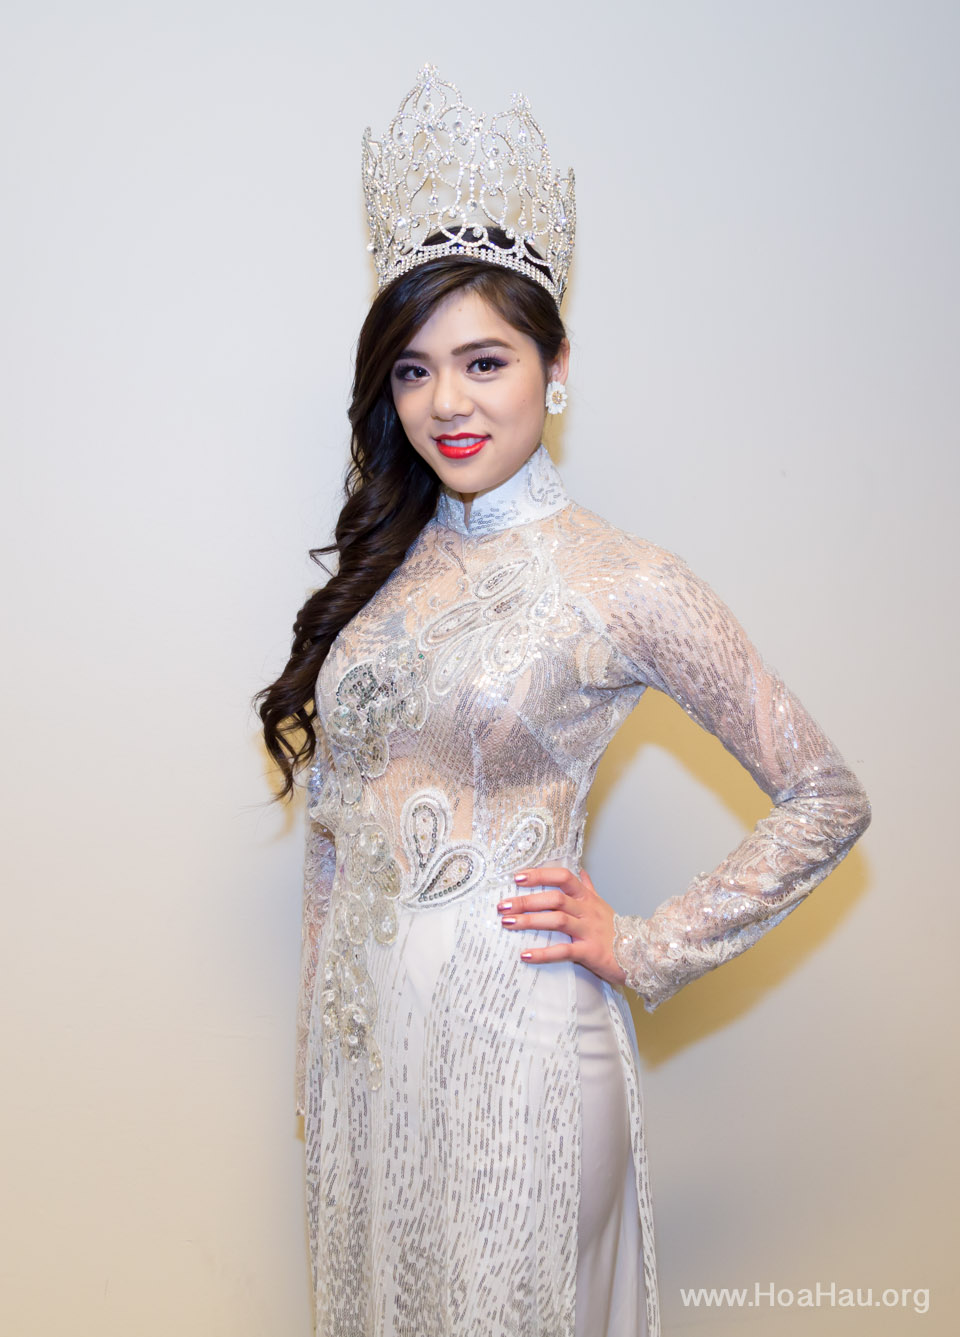 Miss Vietnam of Northern California 2014 - Hoa Hau Ao Dai Bac Cali 2014 - Behind the Scenes - Image 278